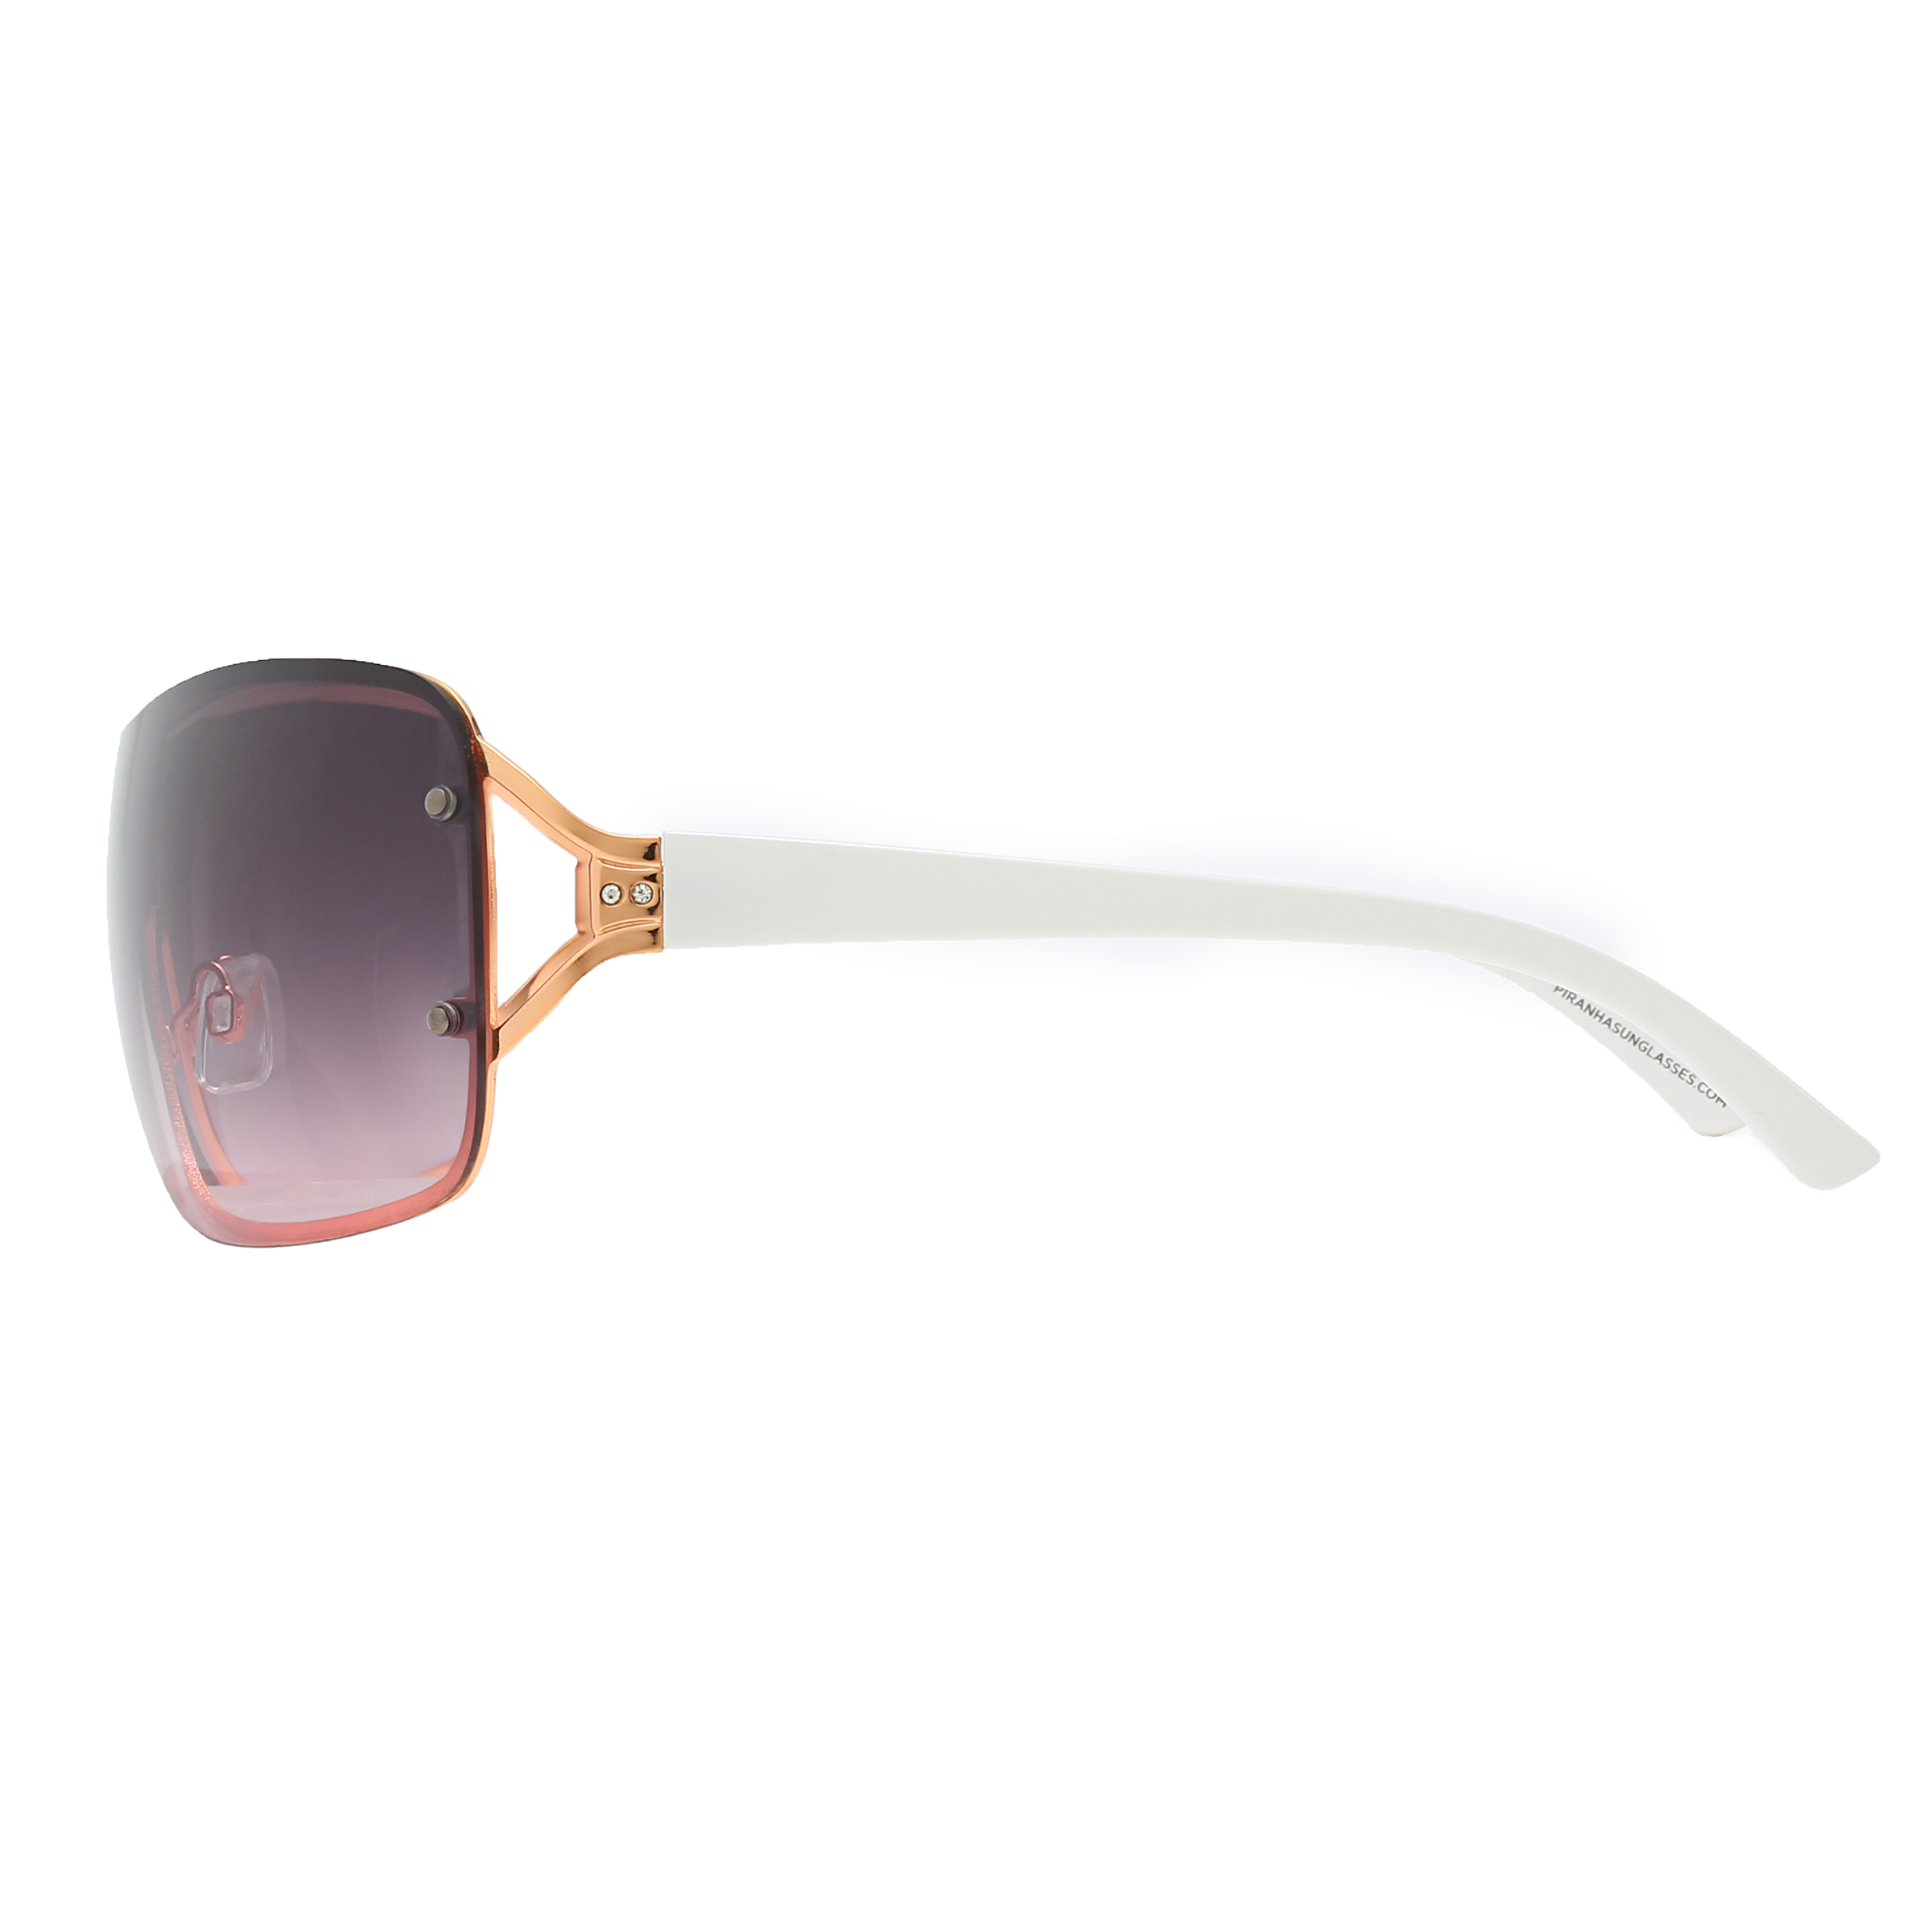 Piranha Eyewear Birkin Oversize Shield Sunglasses for Women with Purple Gradient Lens - image 3 of 3